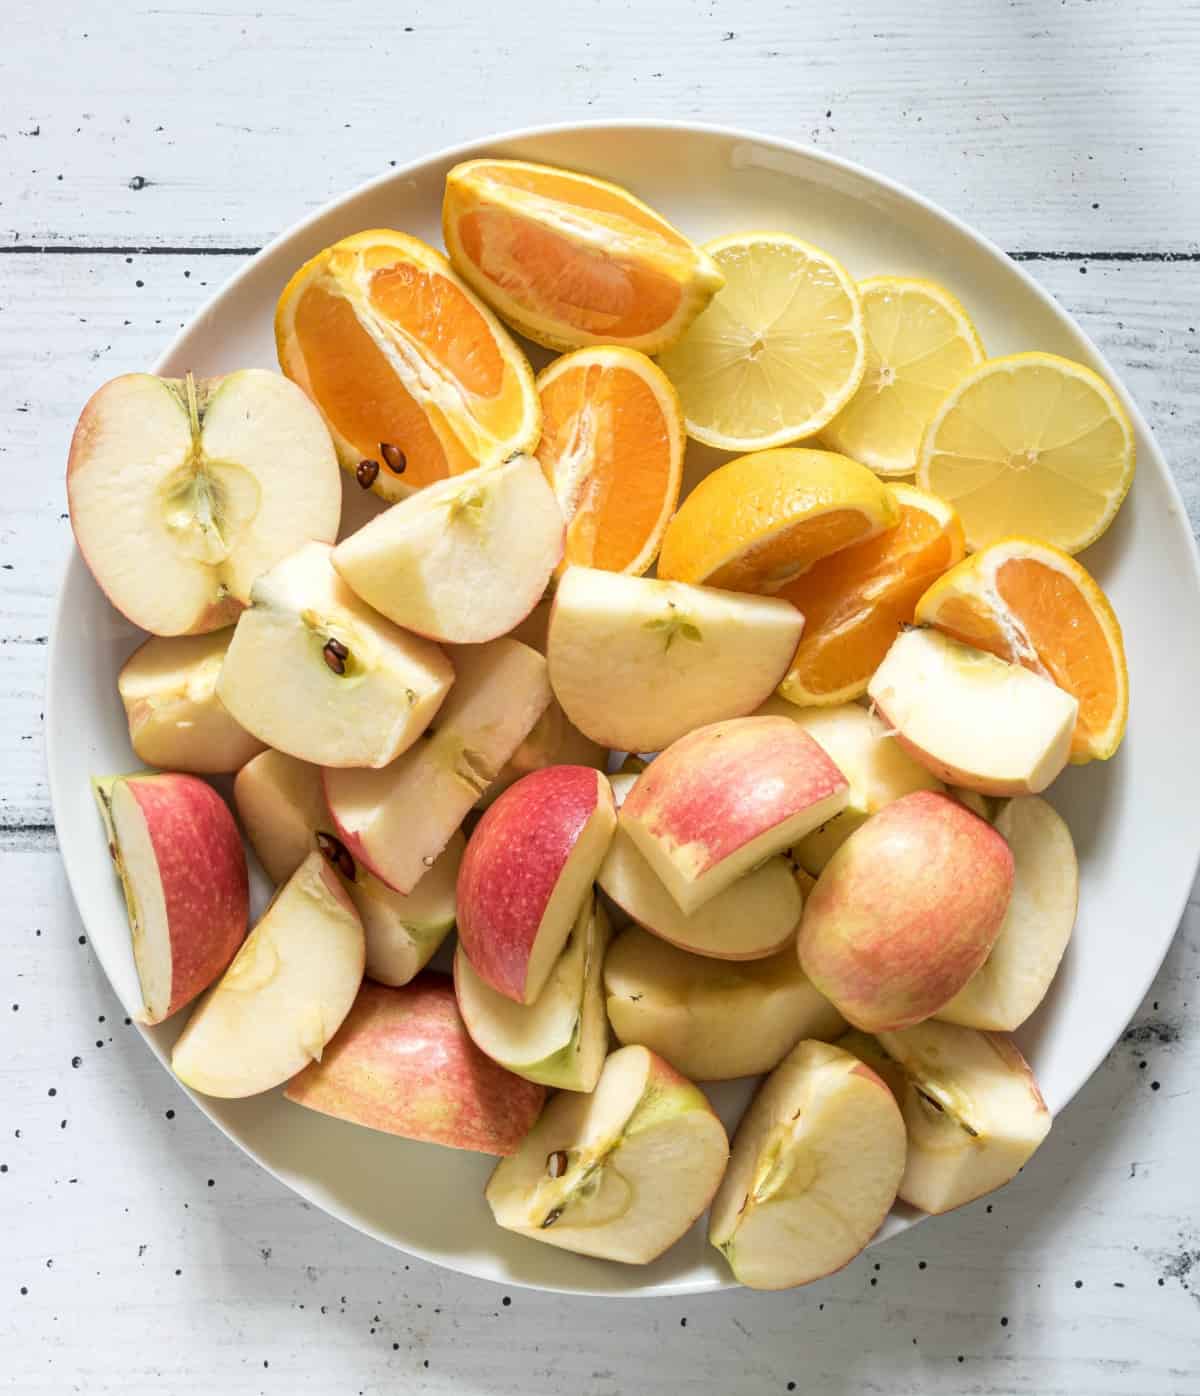 Apples, lemons, and oranges chopped for apple cider.